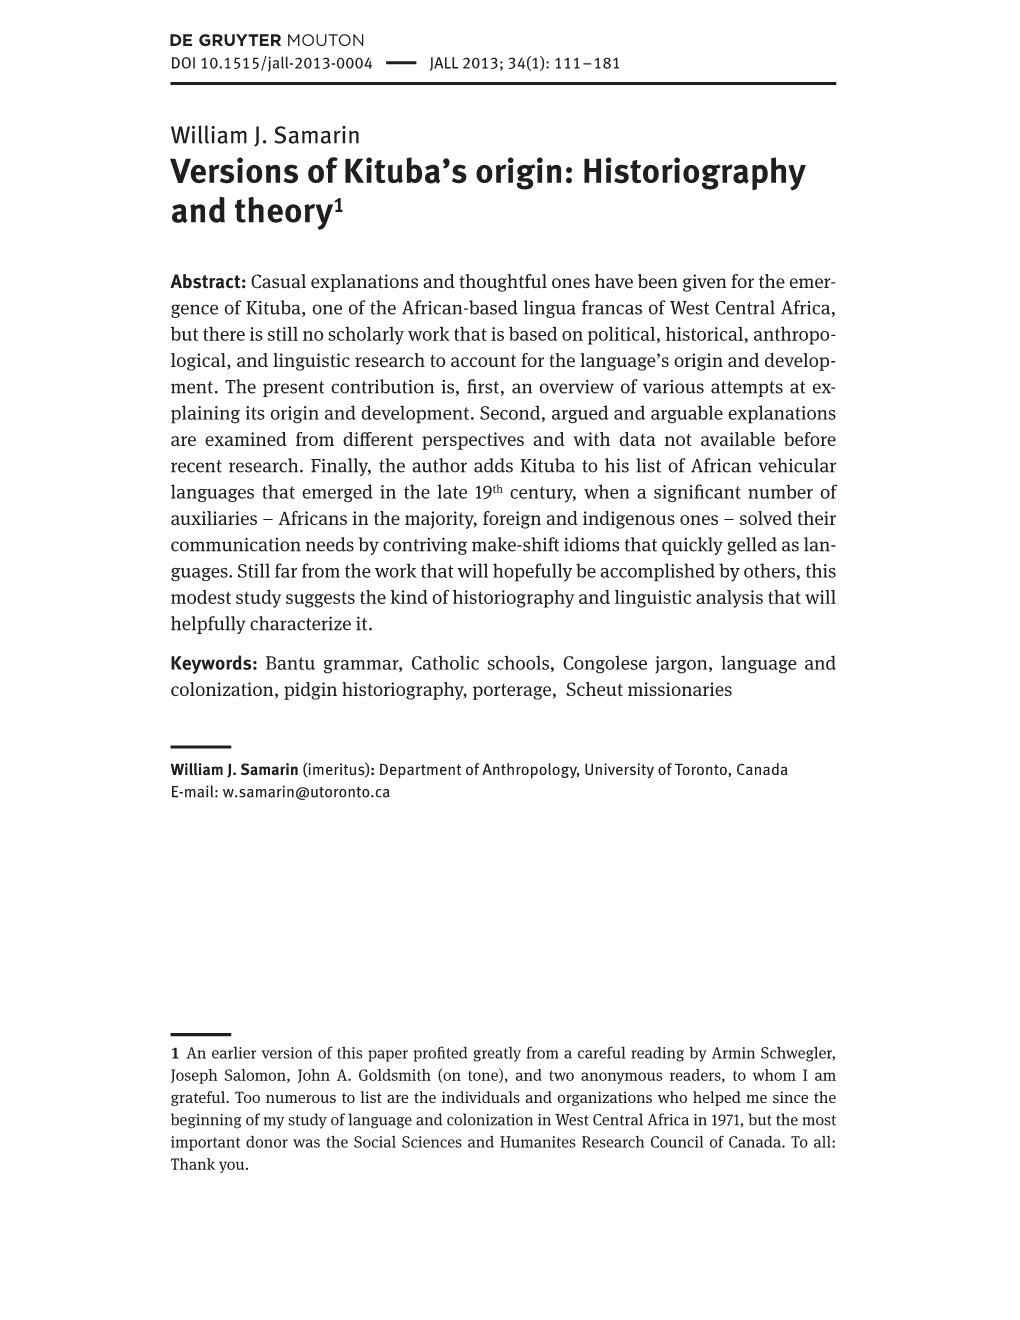 Versions of Kituba's Origin